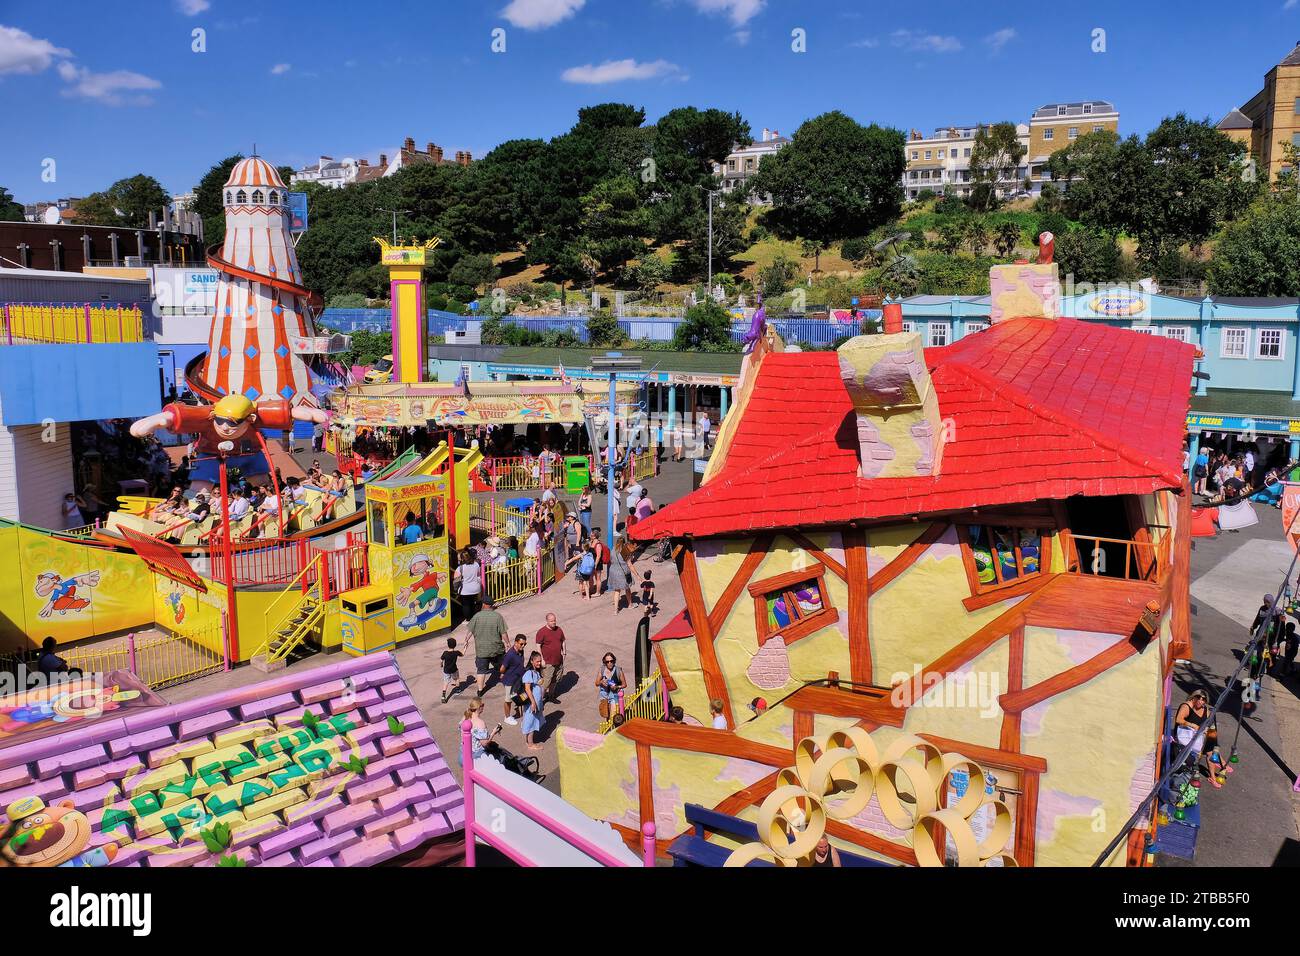 Southend-on-Sea: Colourful Adventure Island amusement theme park in Southend-on-Sea, Essex, England, UK Stock Photo